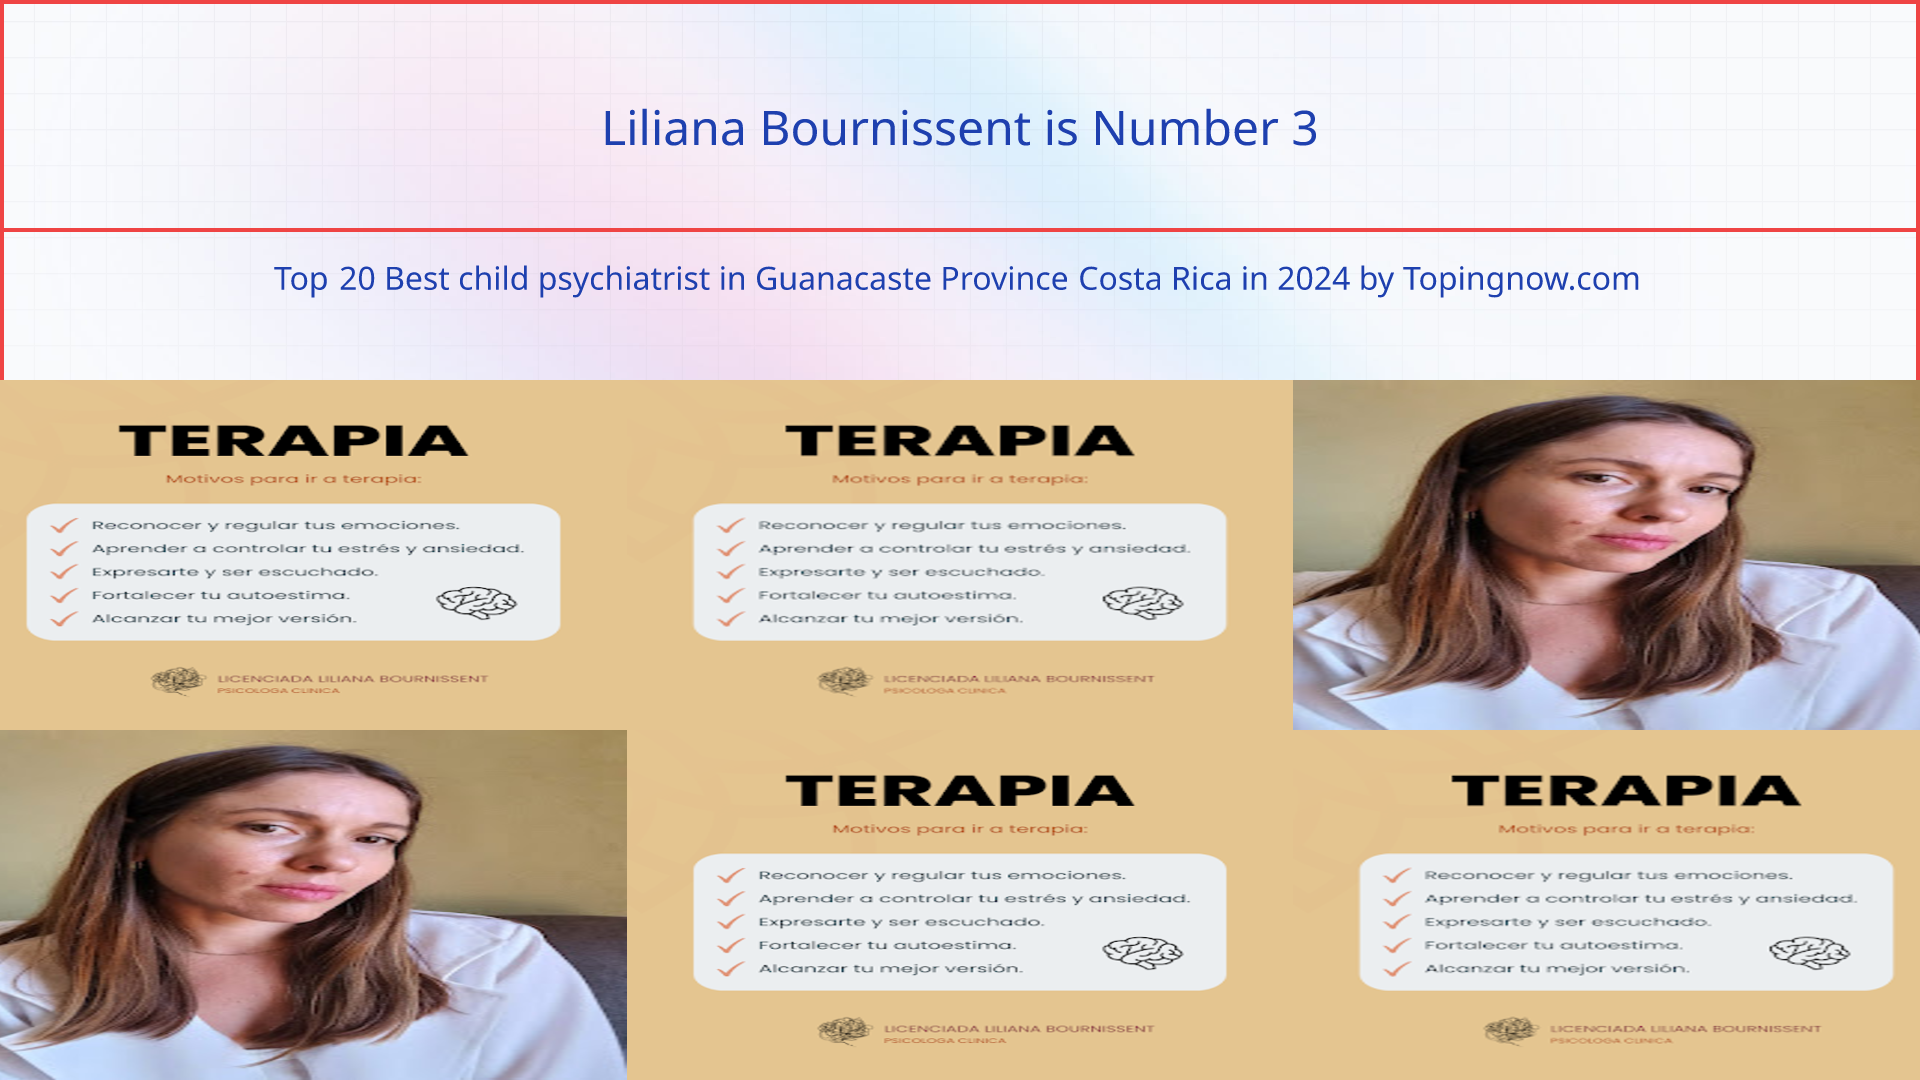 Liliana Bournissent: Top 20 Best child psychiatrist in Guanacaste Province Costa Rica in 2024